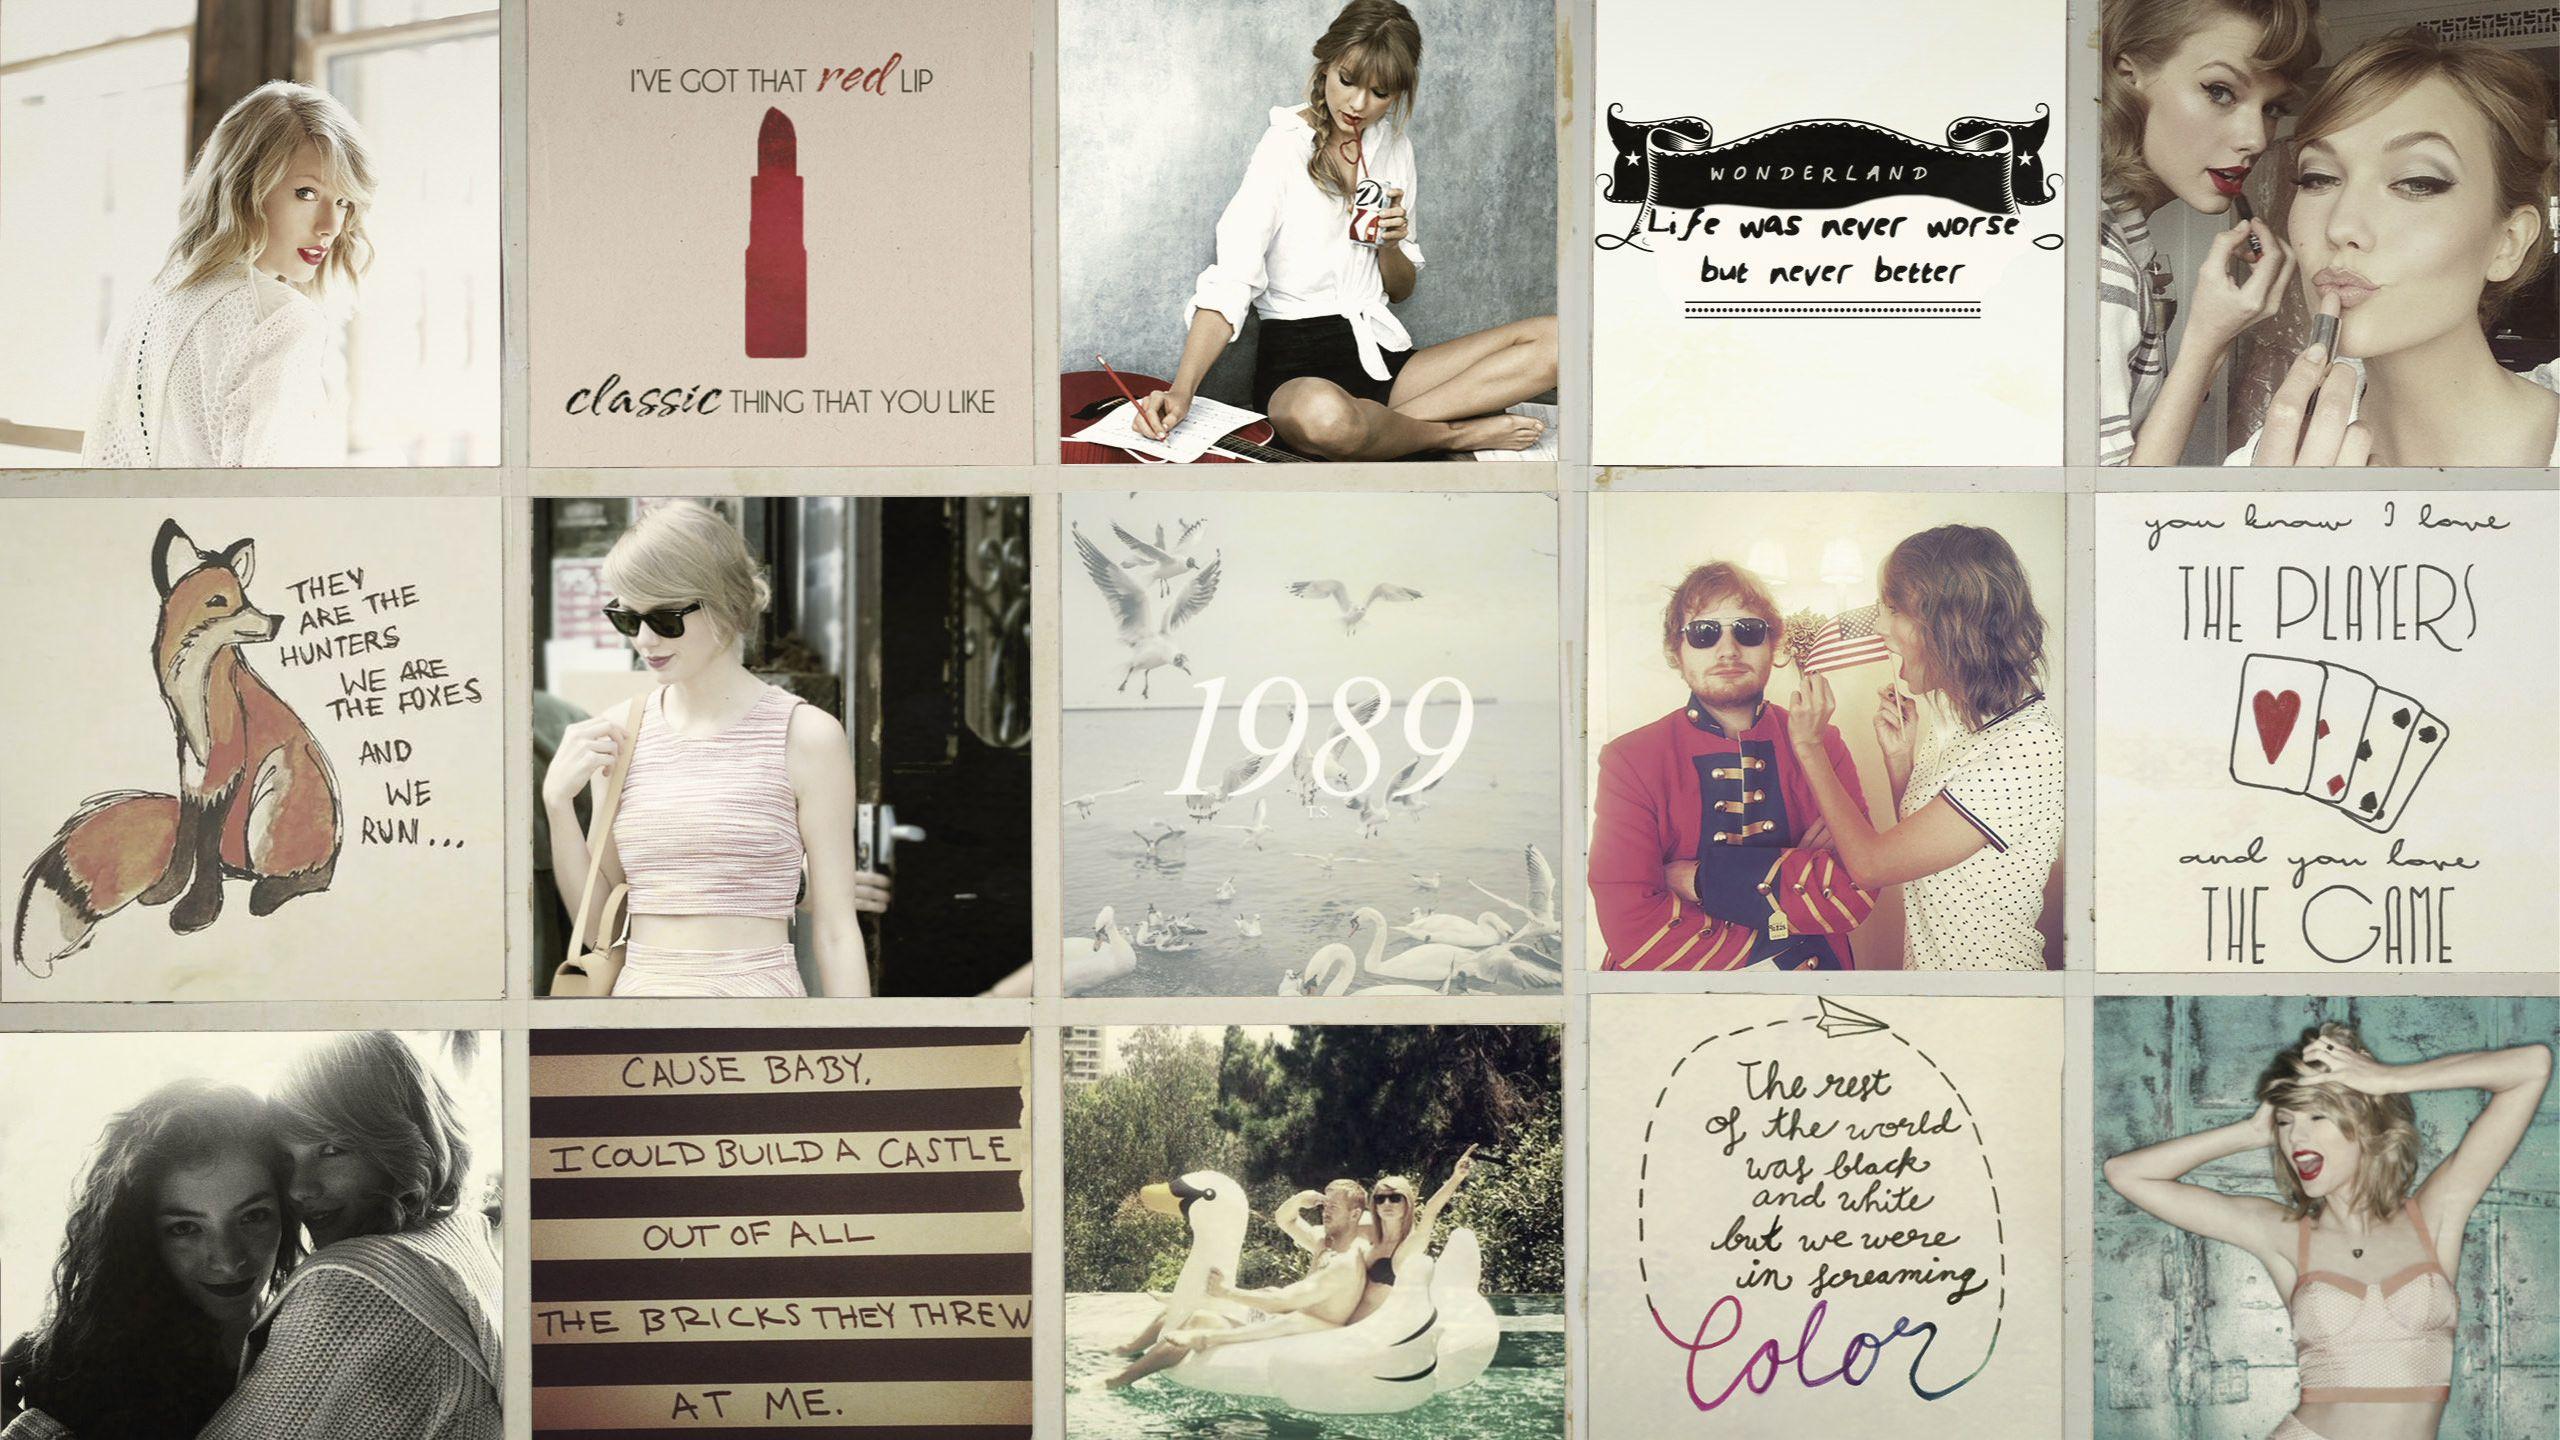 HD wallpaper Taylor Swift photoshoot 1989 music album  Wallpaper Flare